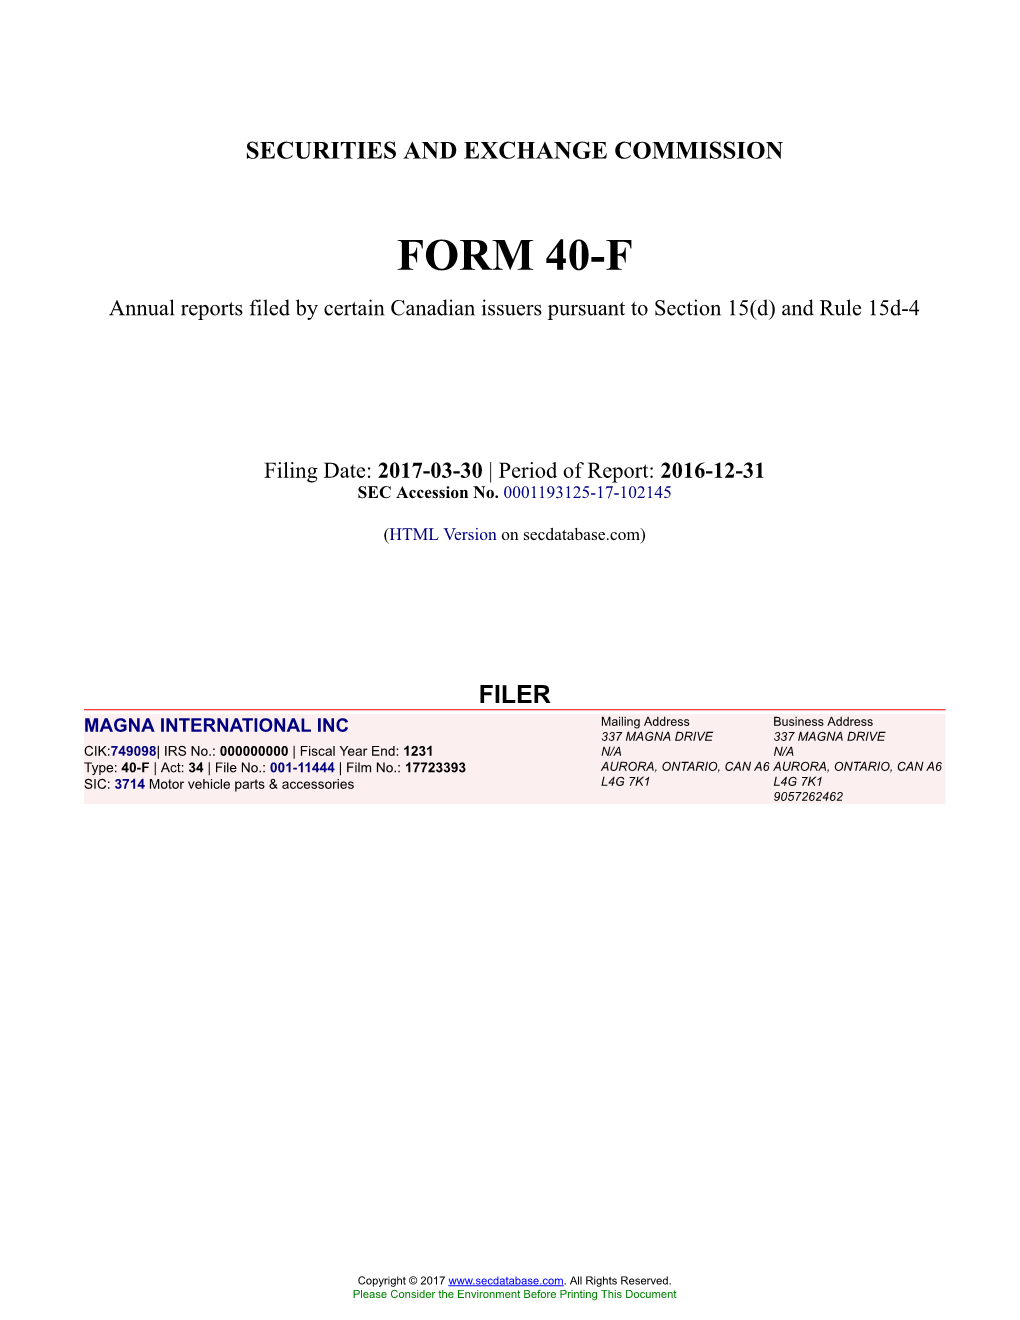 MAGNA INTERNATIONAL INC Form 40-F Filed 2017-03-30